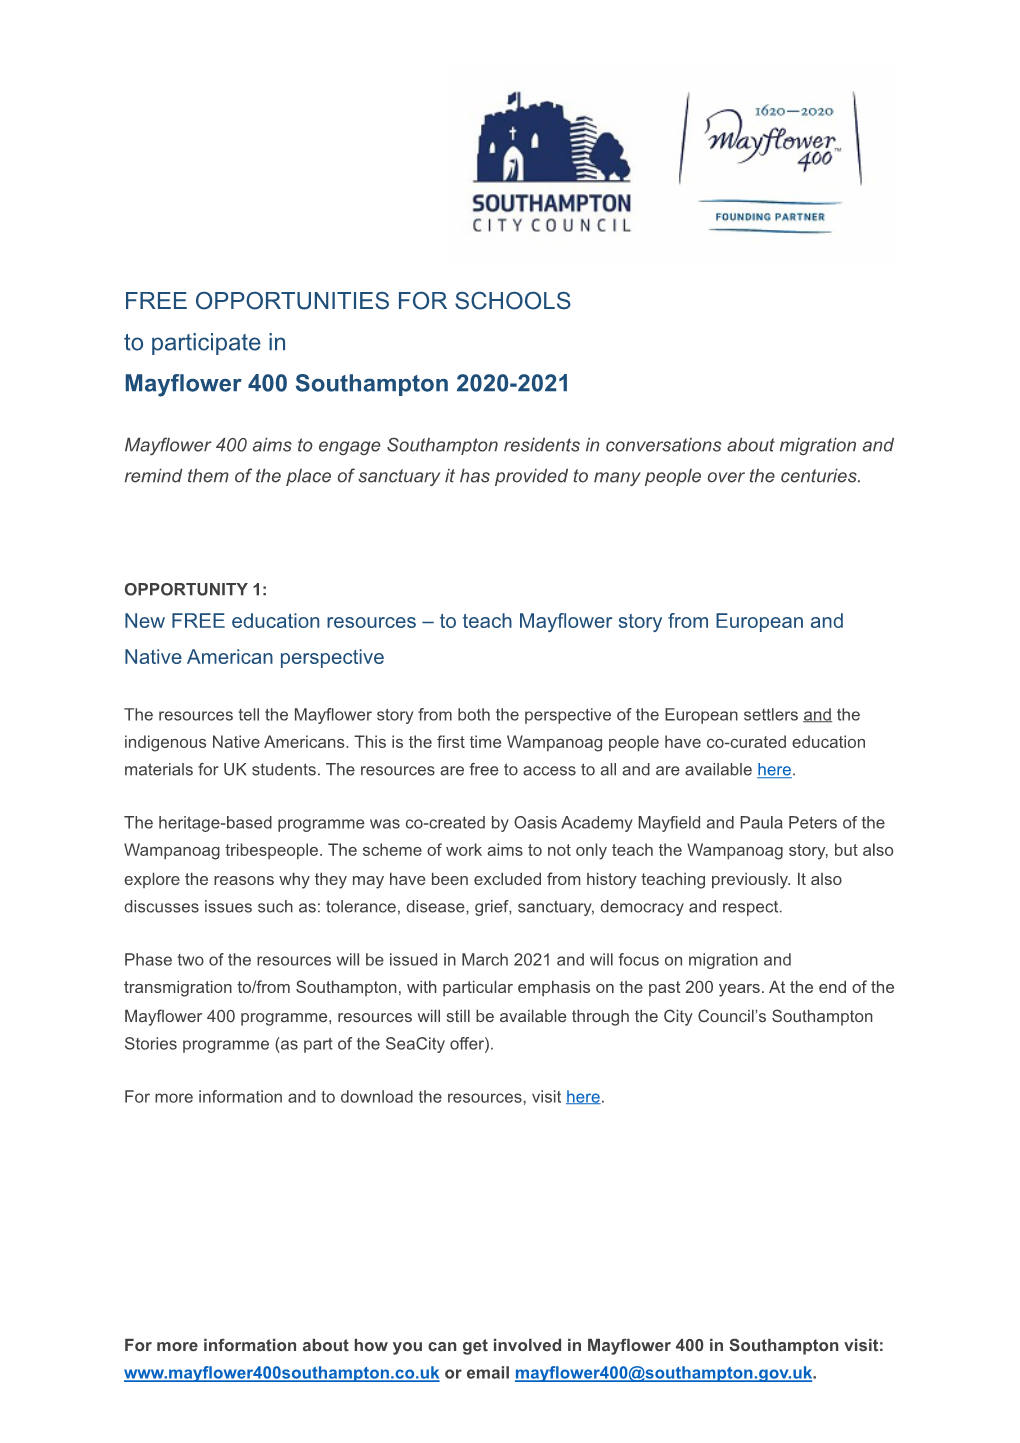 Mayflower 400 Southampton Info for Schools